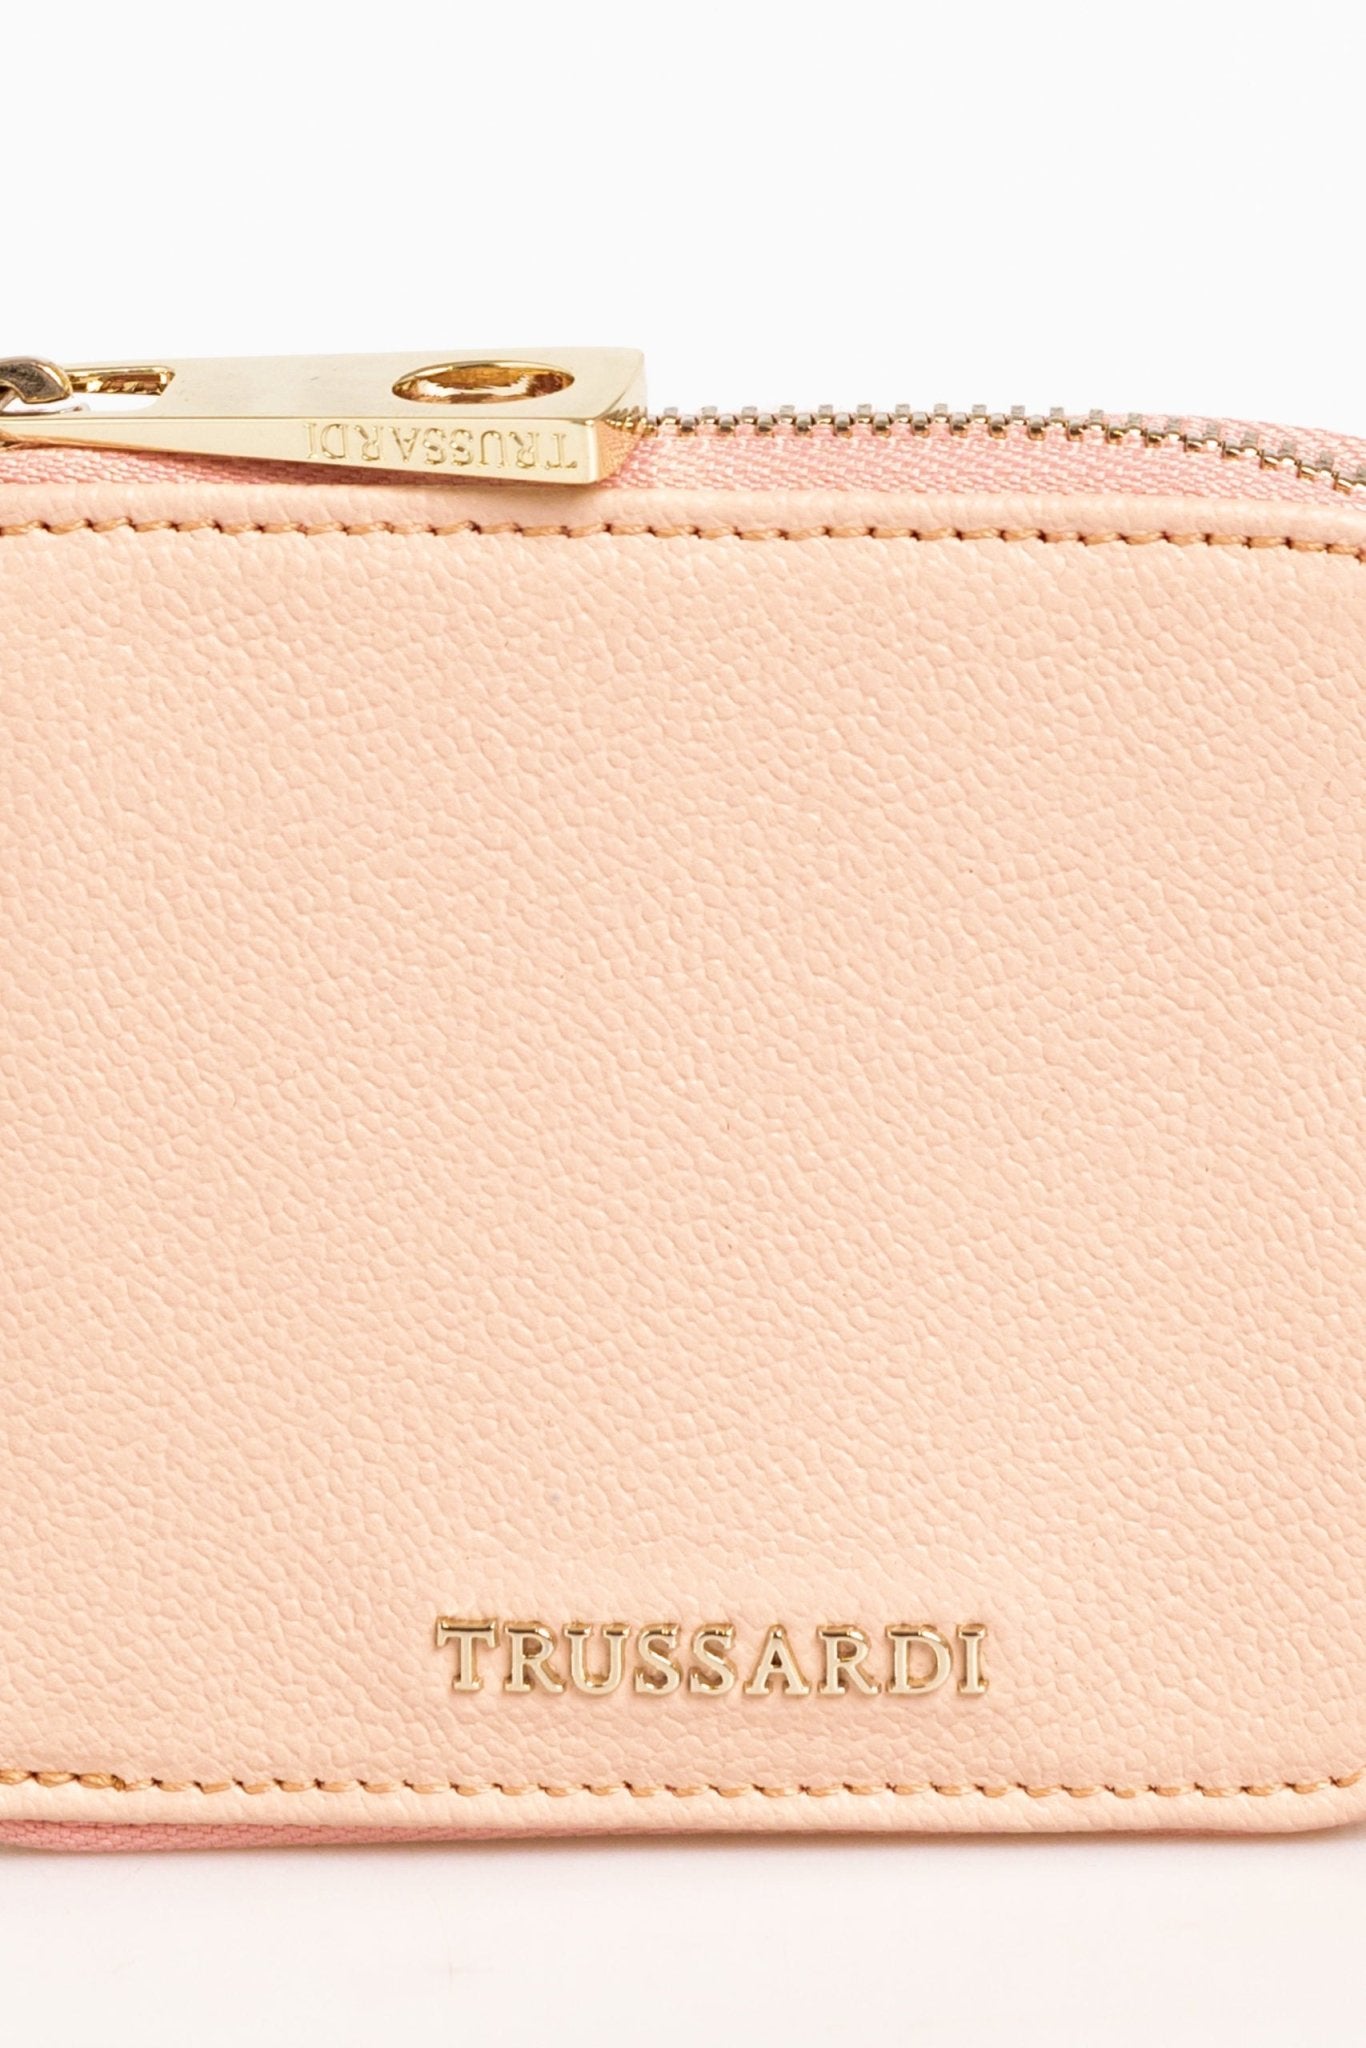 Trussardi Pink Leather Wallet - Fizigo